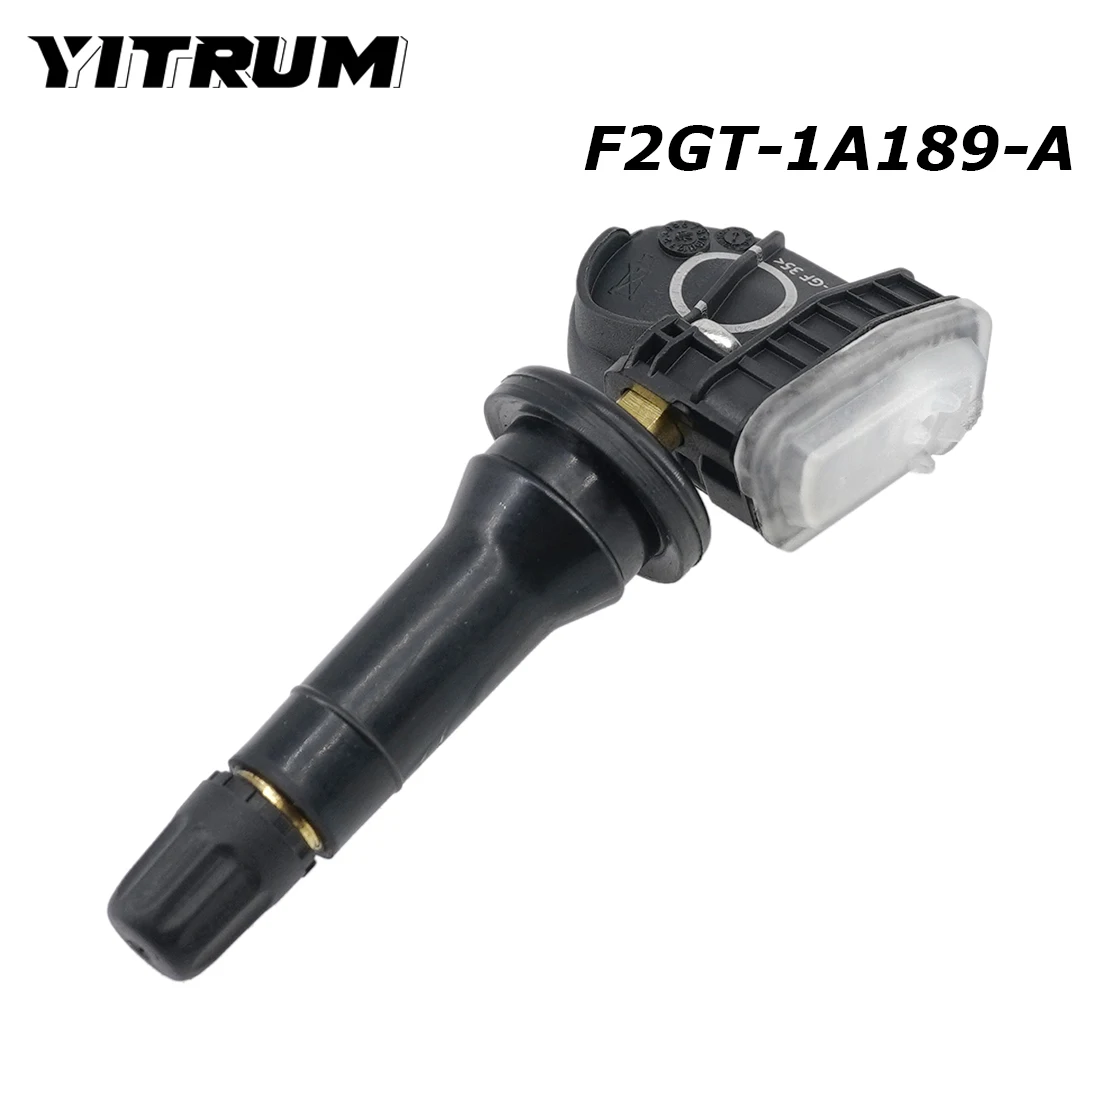 

YITRUM F2GT-1A189-A F2GT-1A150-AB TPMS Sensor For Ford Explorer Edge F150 Flex Mustang Ecosport Lincoln Continental MKX MKS Mark